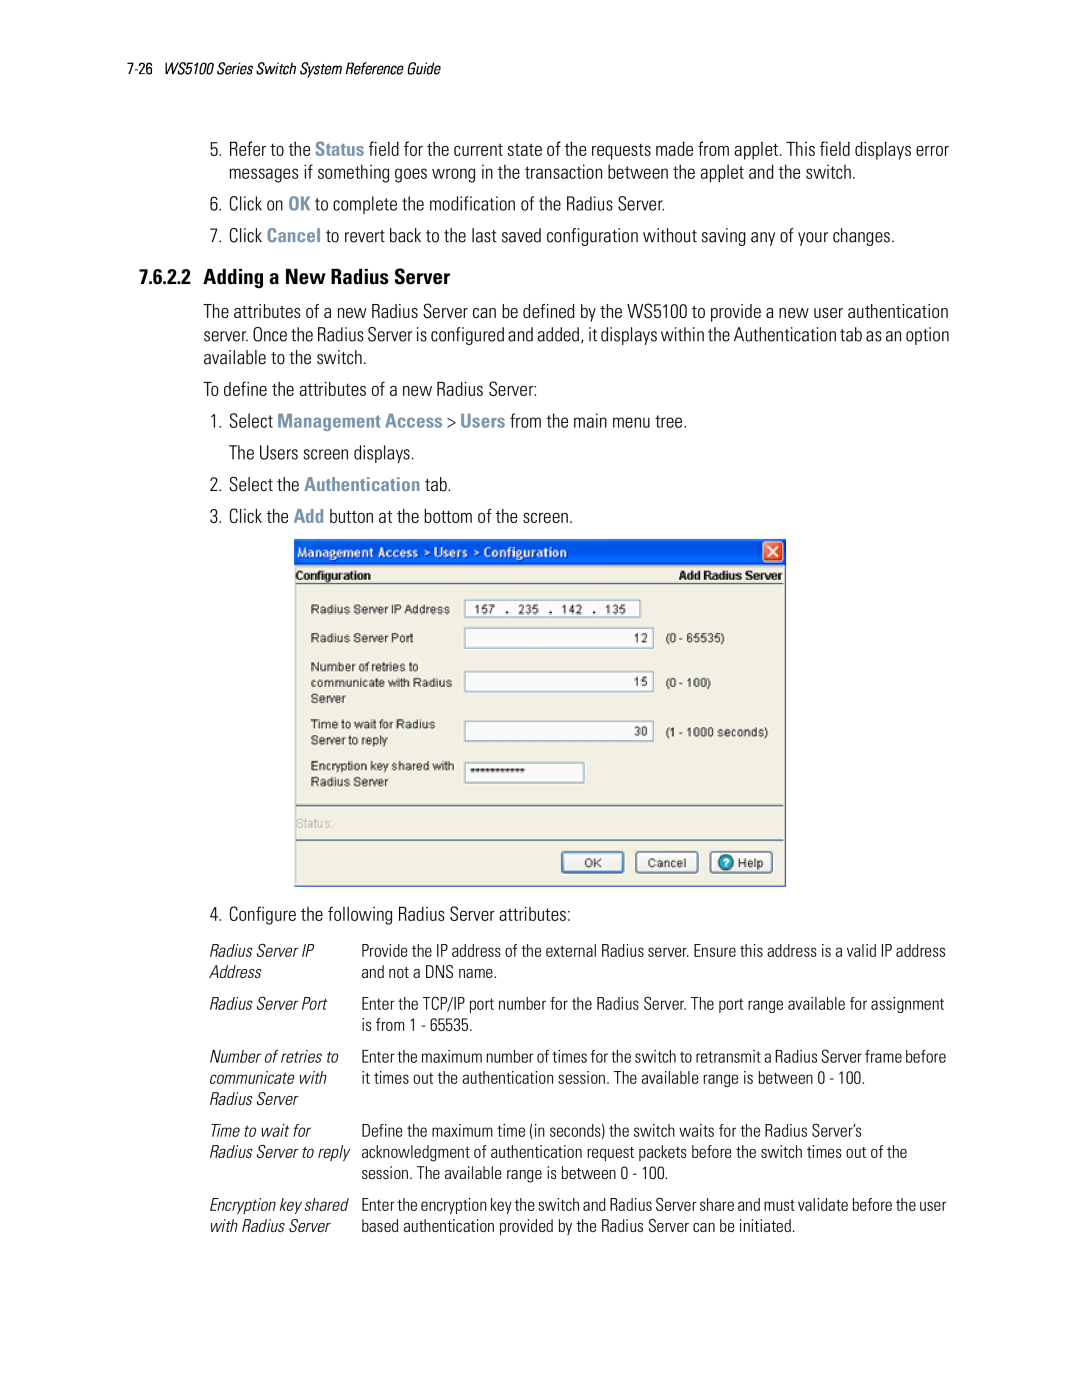 Motorola WS5100 manual 7.6.2.2Adding a New Radius Server 